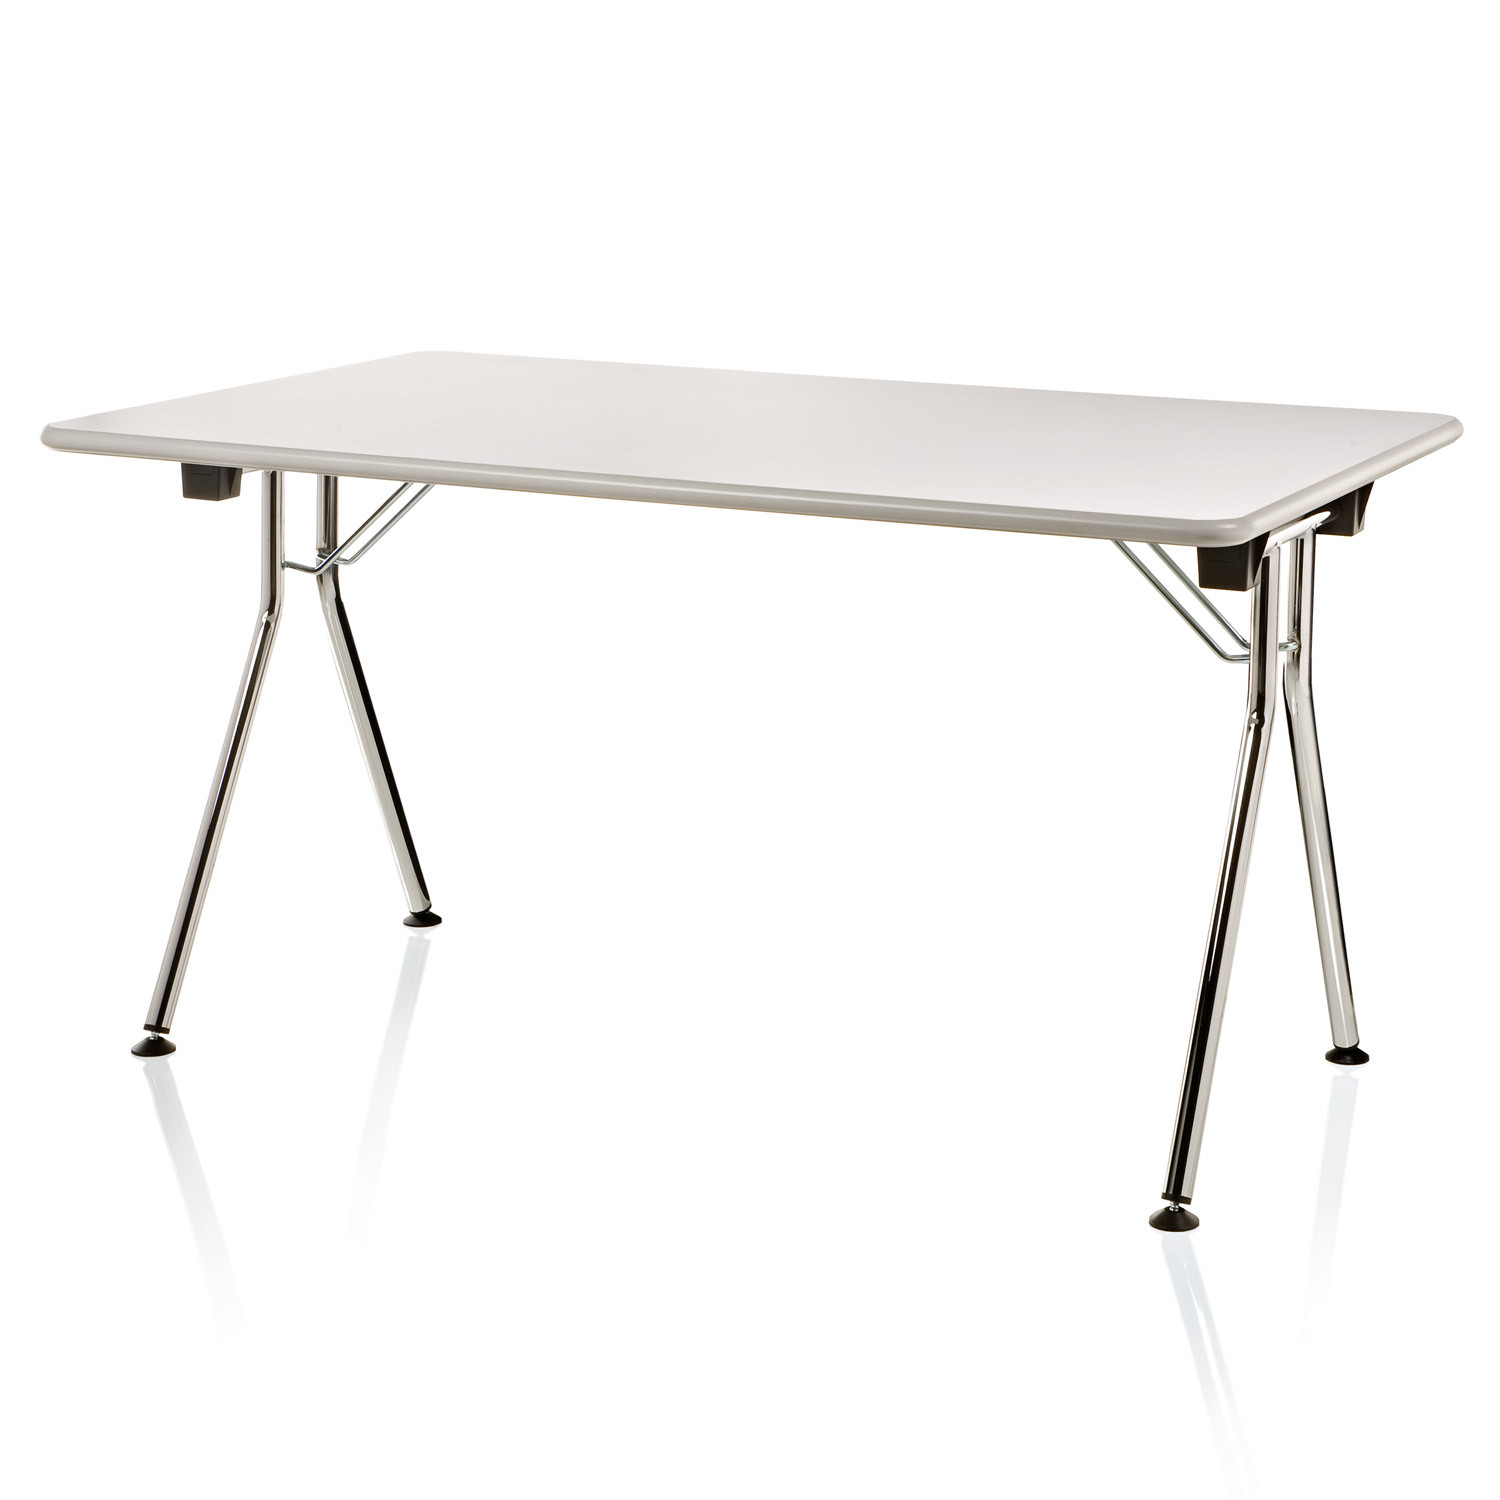 Inka Folding Table